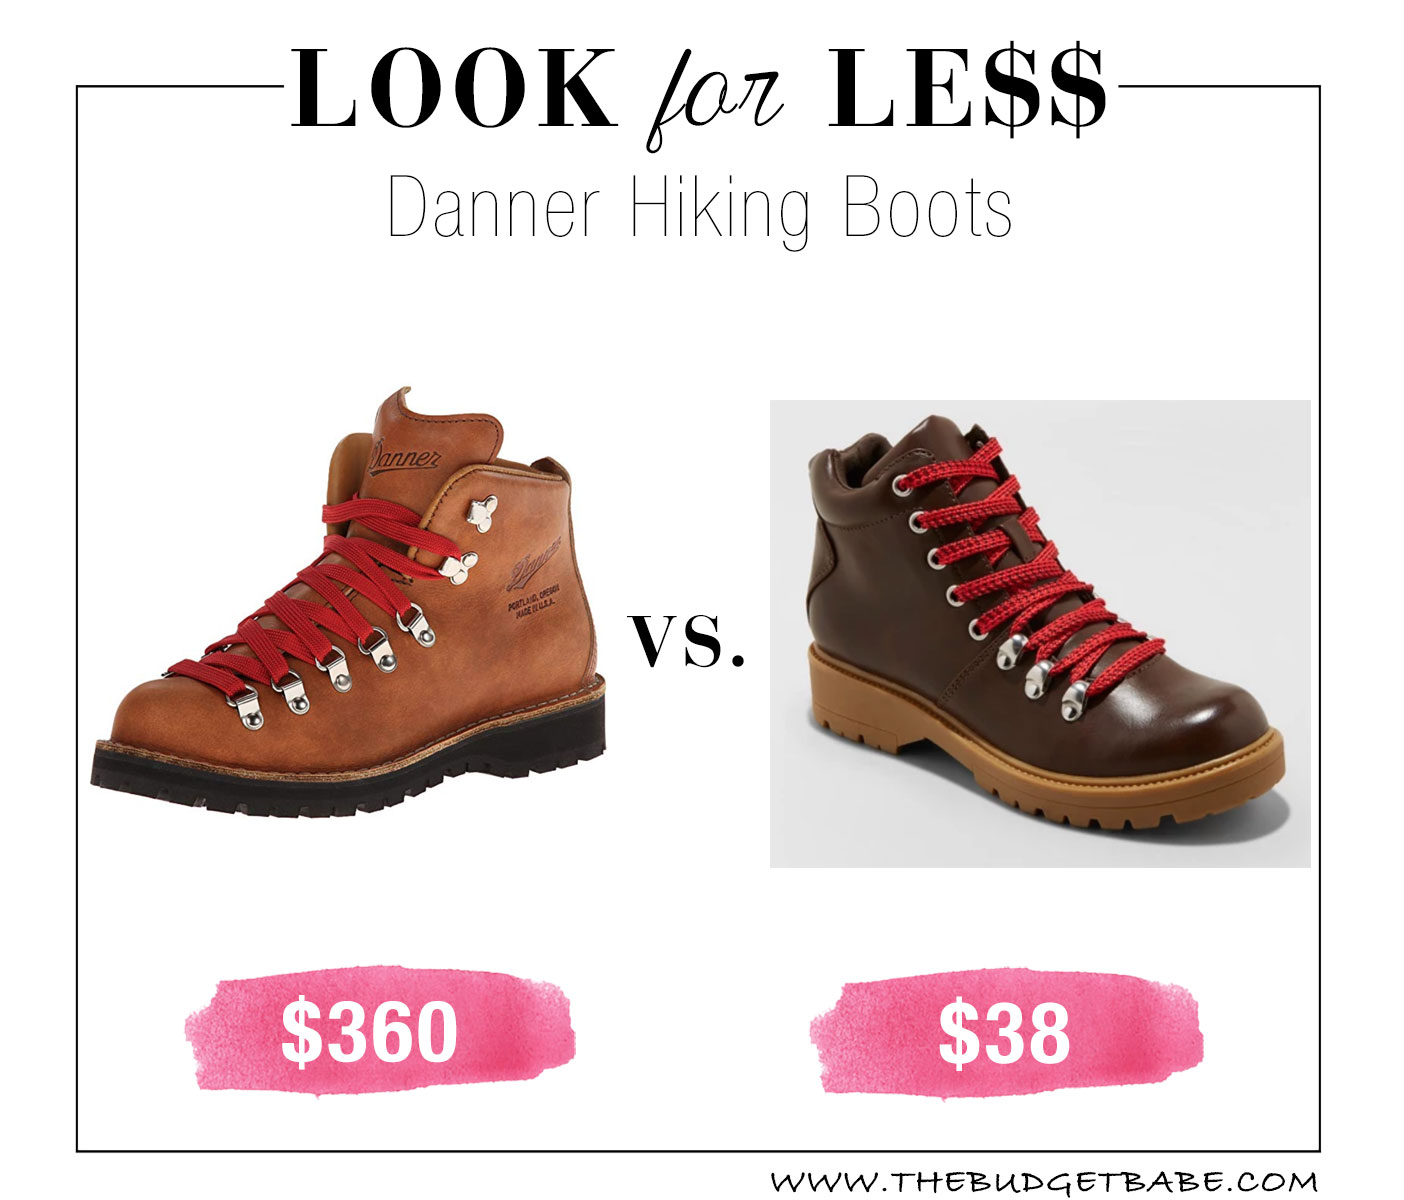 Danner hiking boot dupes at Target!